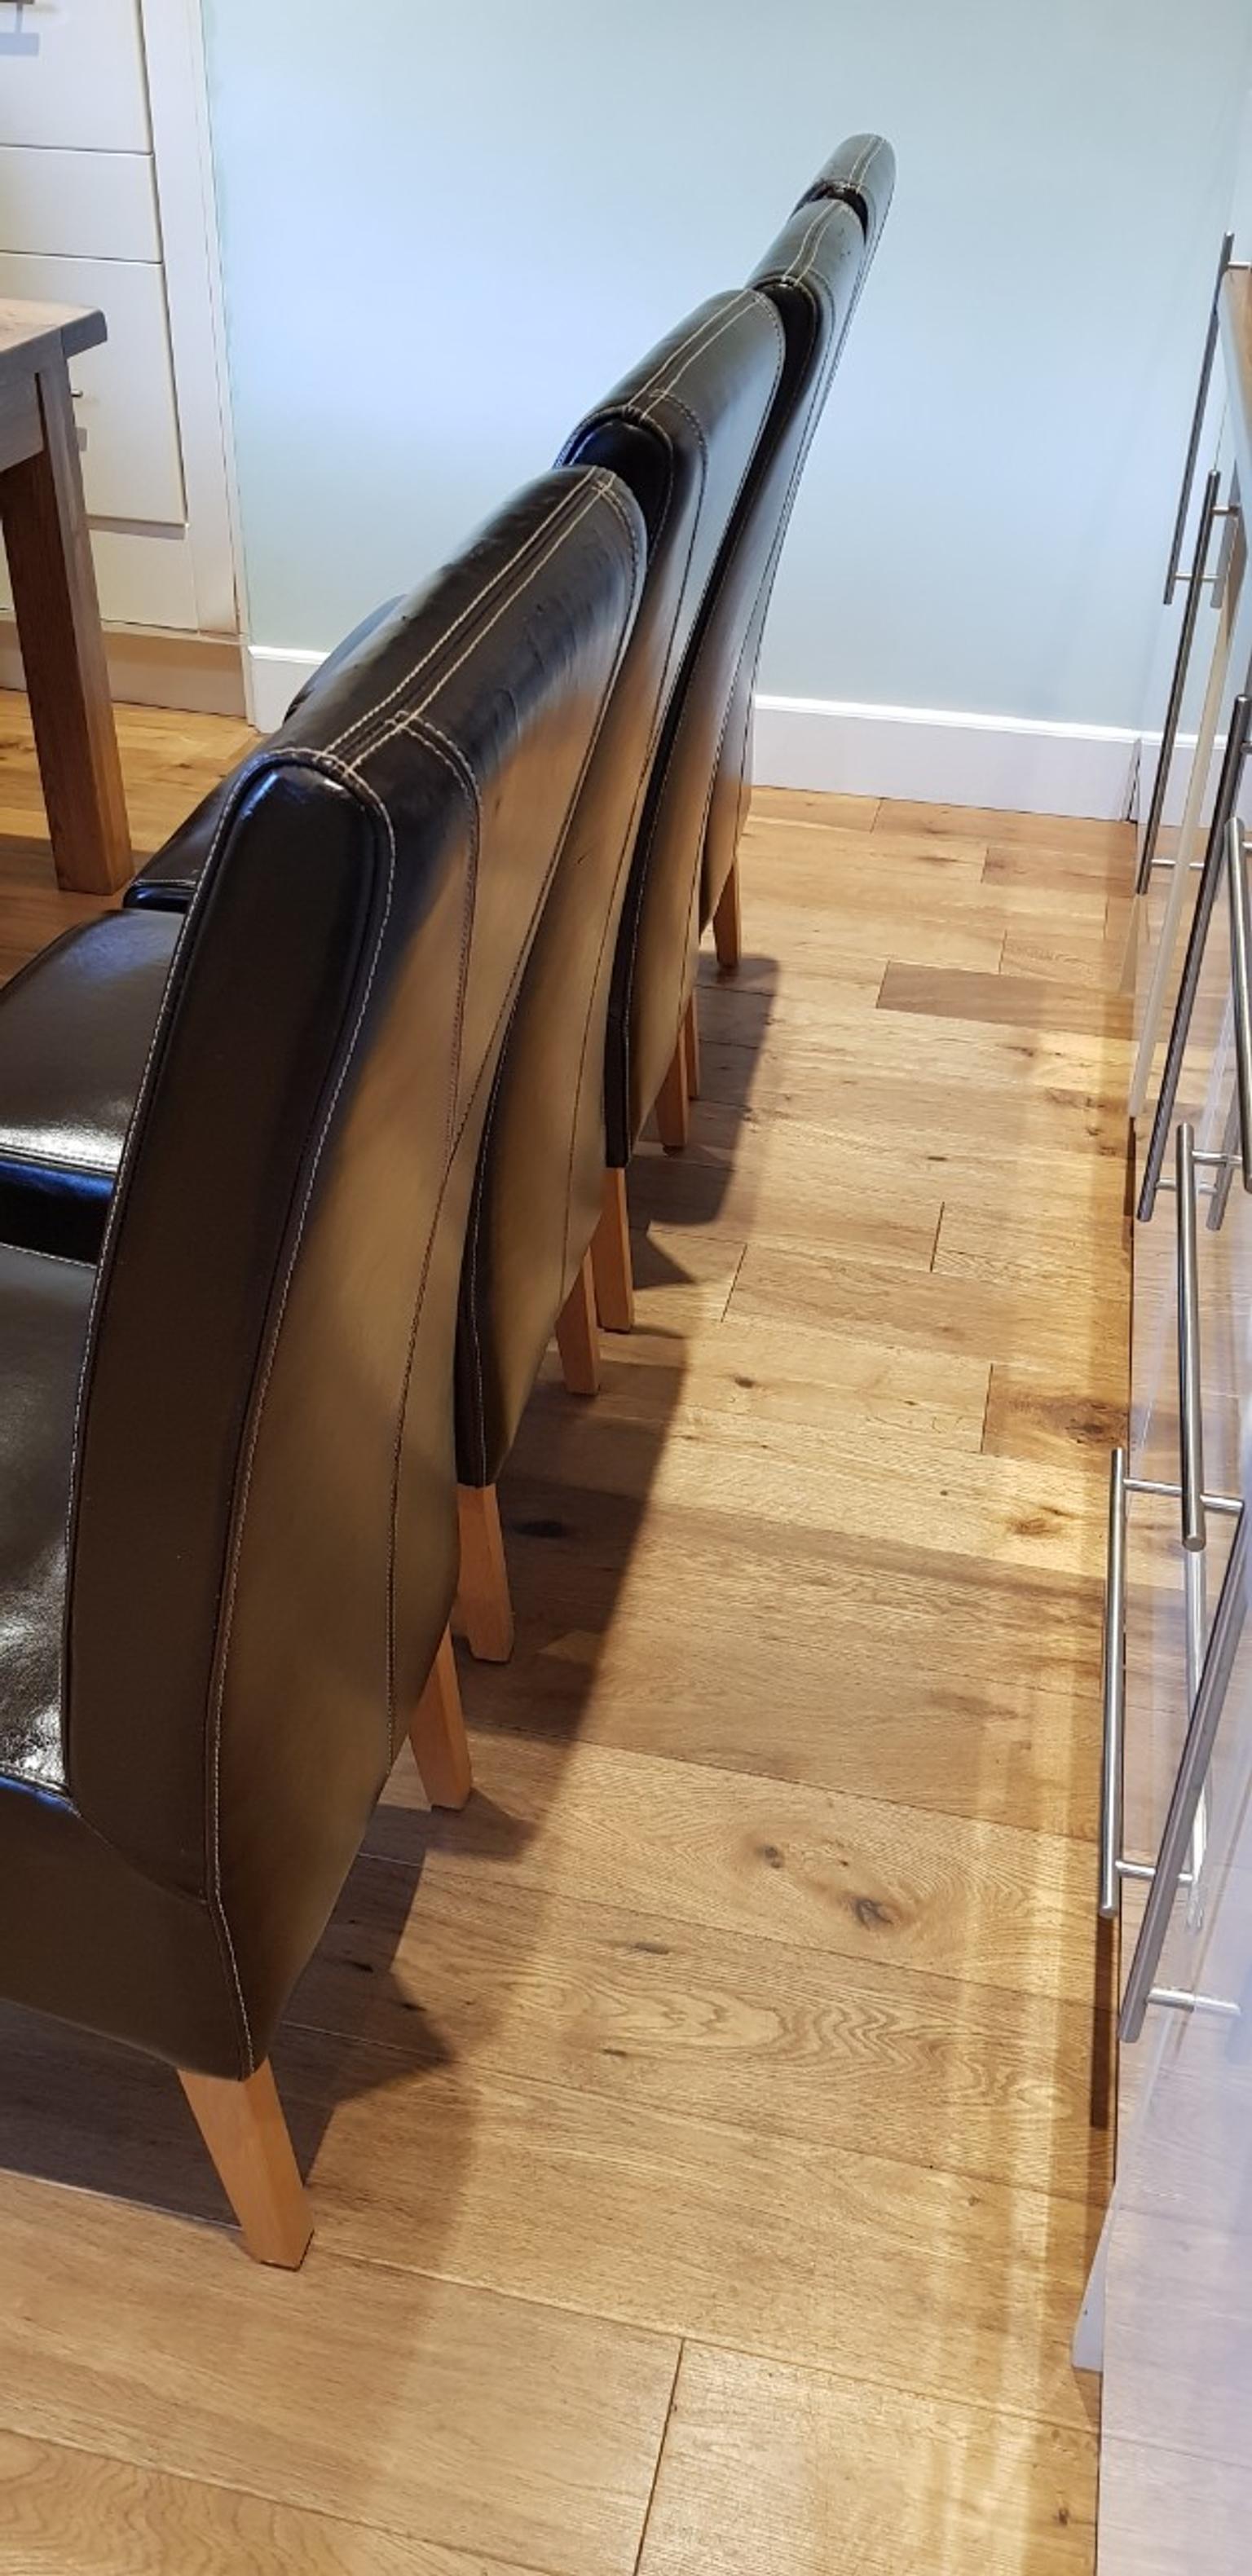 4 Leather Dining Chairs In Wf17 Kirklees Fur 55 00 Zum Verkauf Shpock De